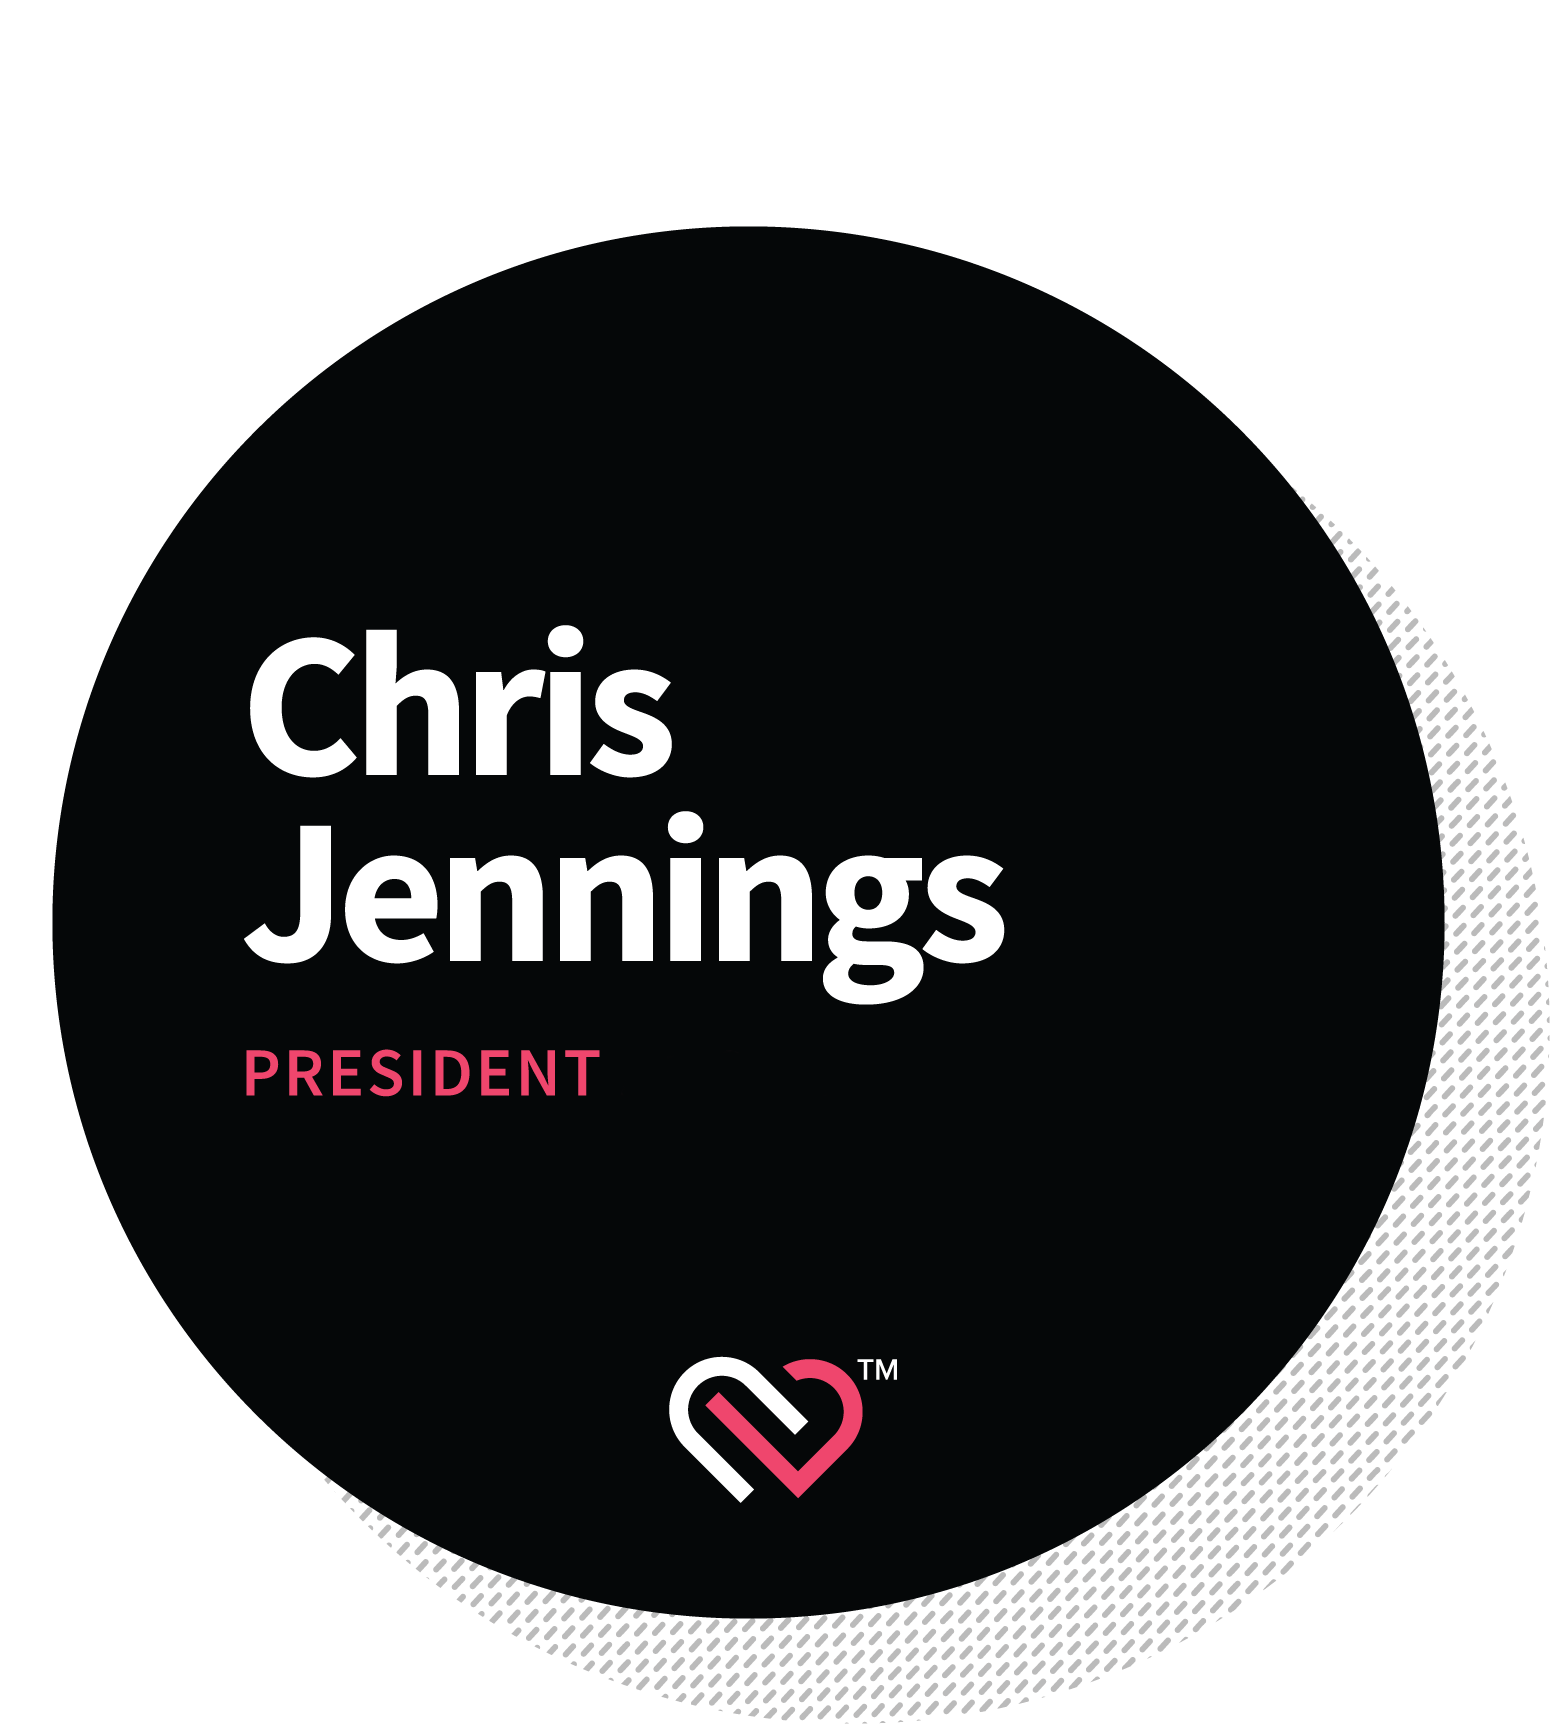 Chris Jennings